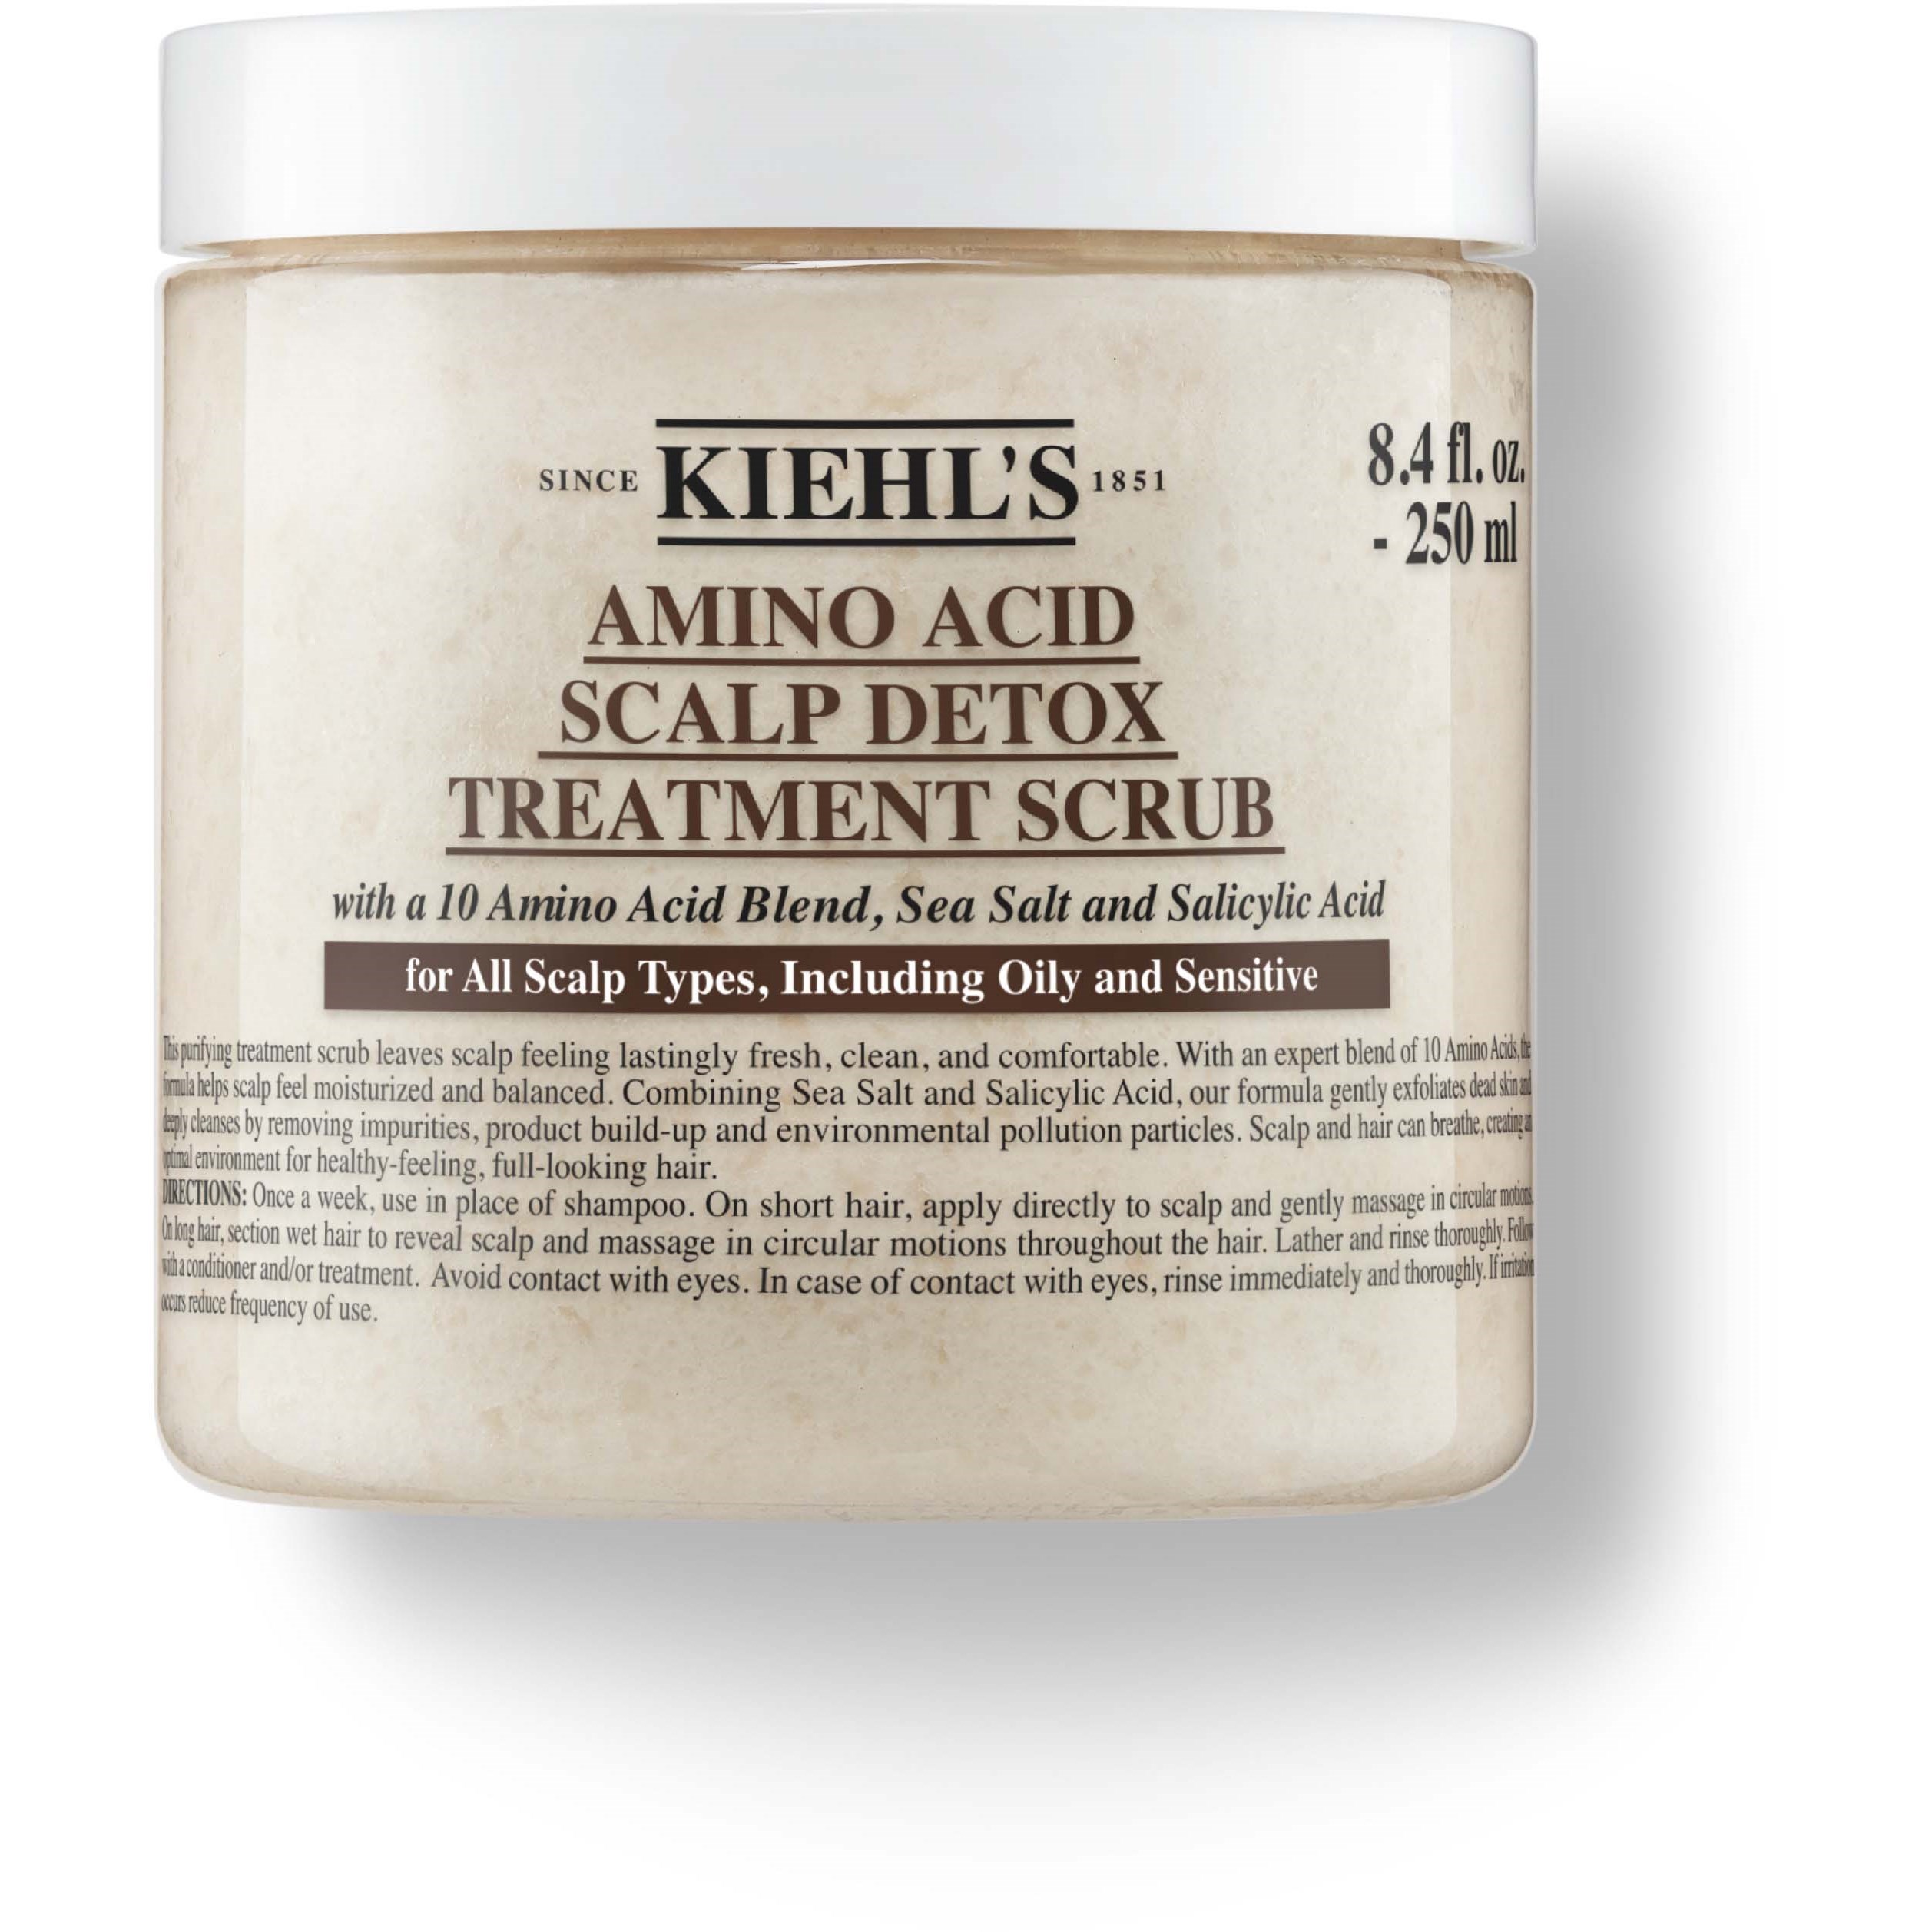 Kiehl's Amino Acid Hair Care Scalp Detox Treatment Scrub 250 ml